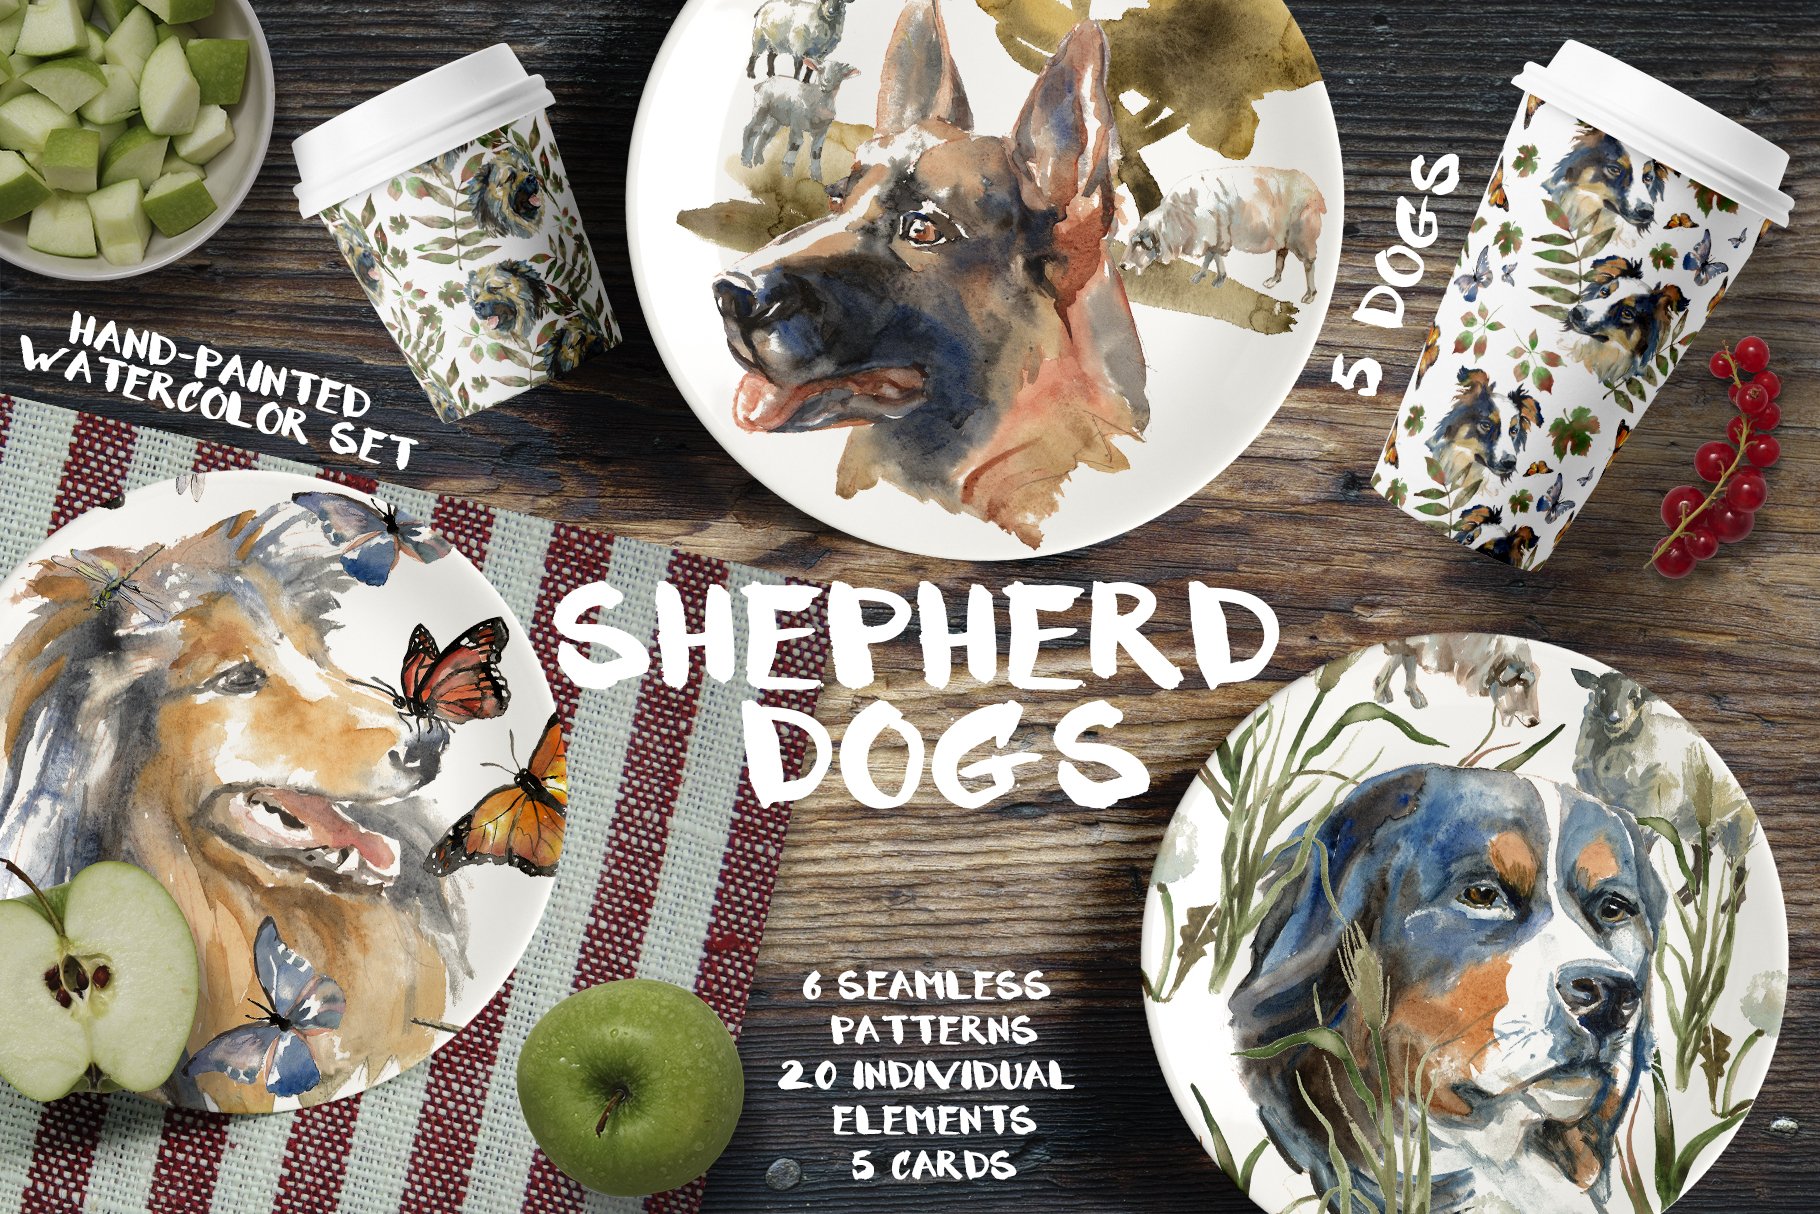 Shepherd Dogs Watercolor Set.